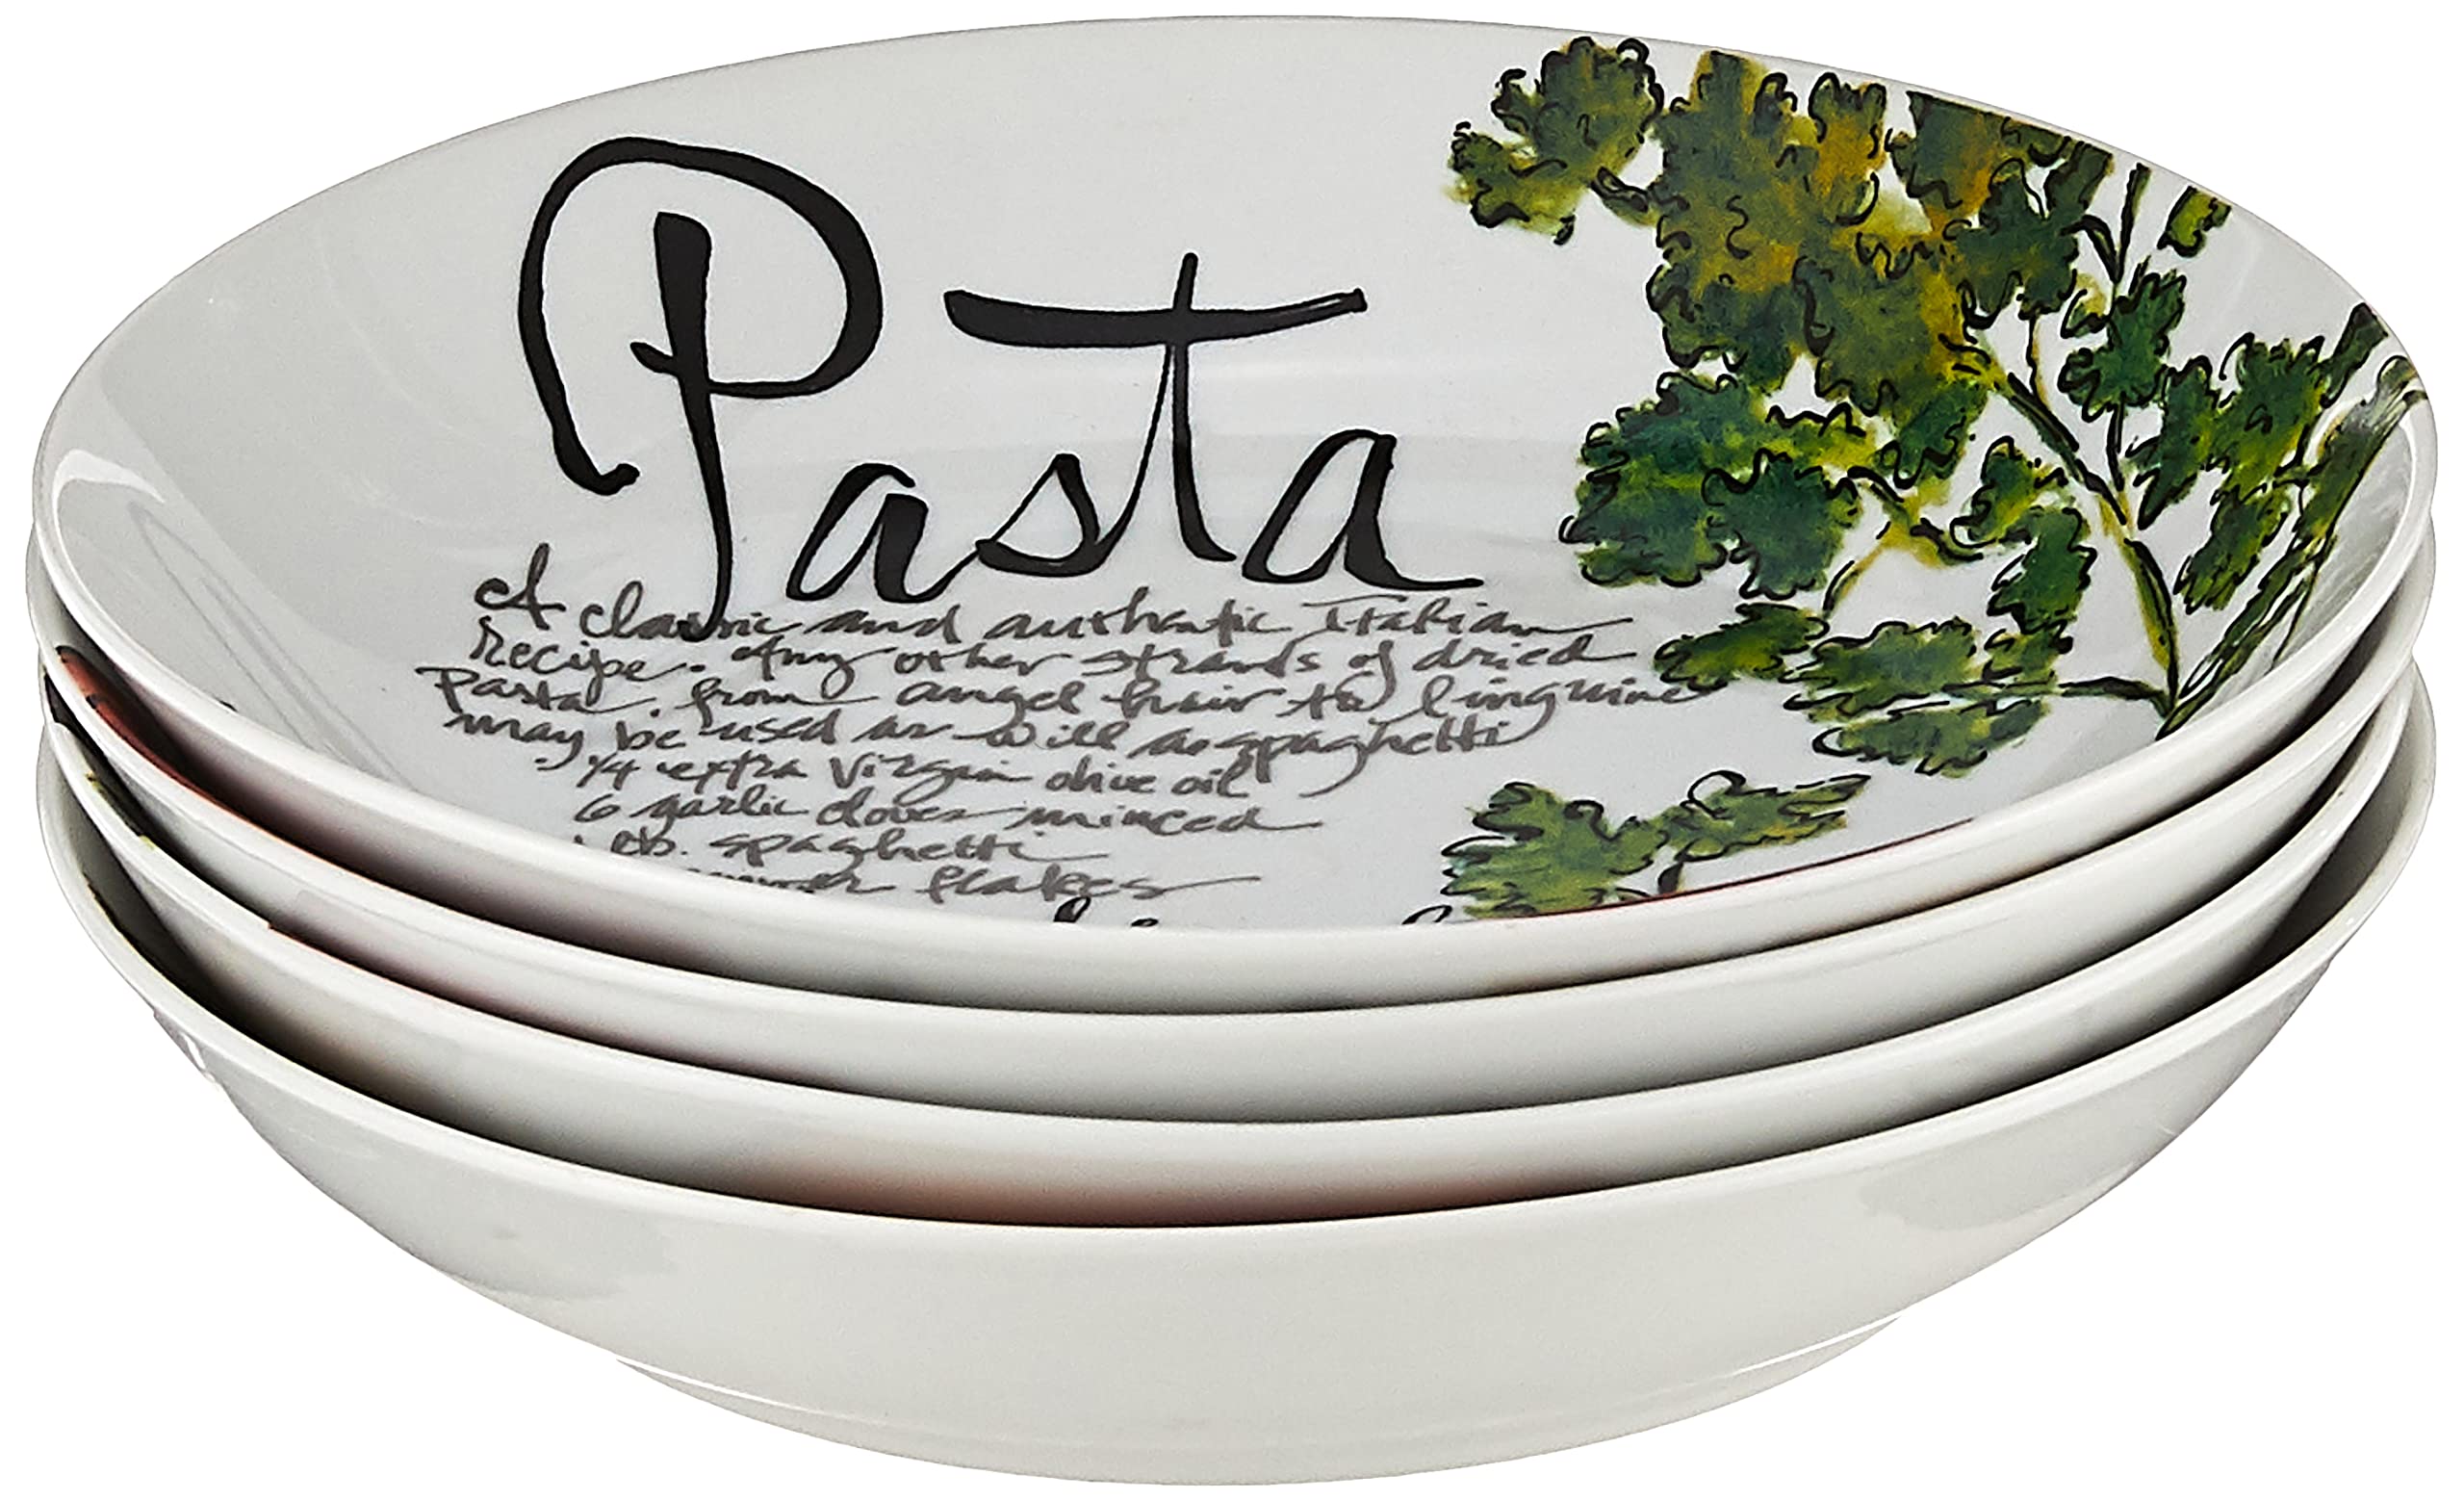 Rosanna Pasta Italiana Pasta Bowls Set of 4,White, 8.25